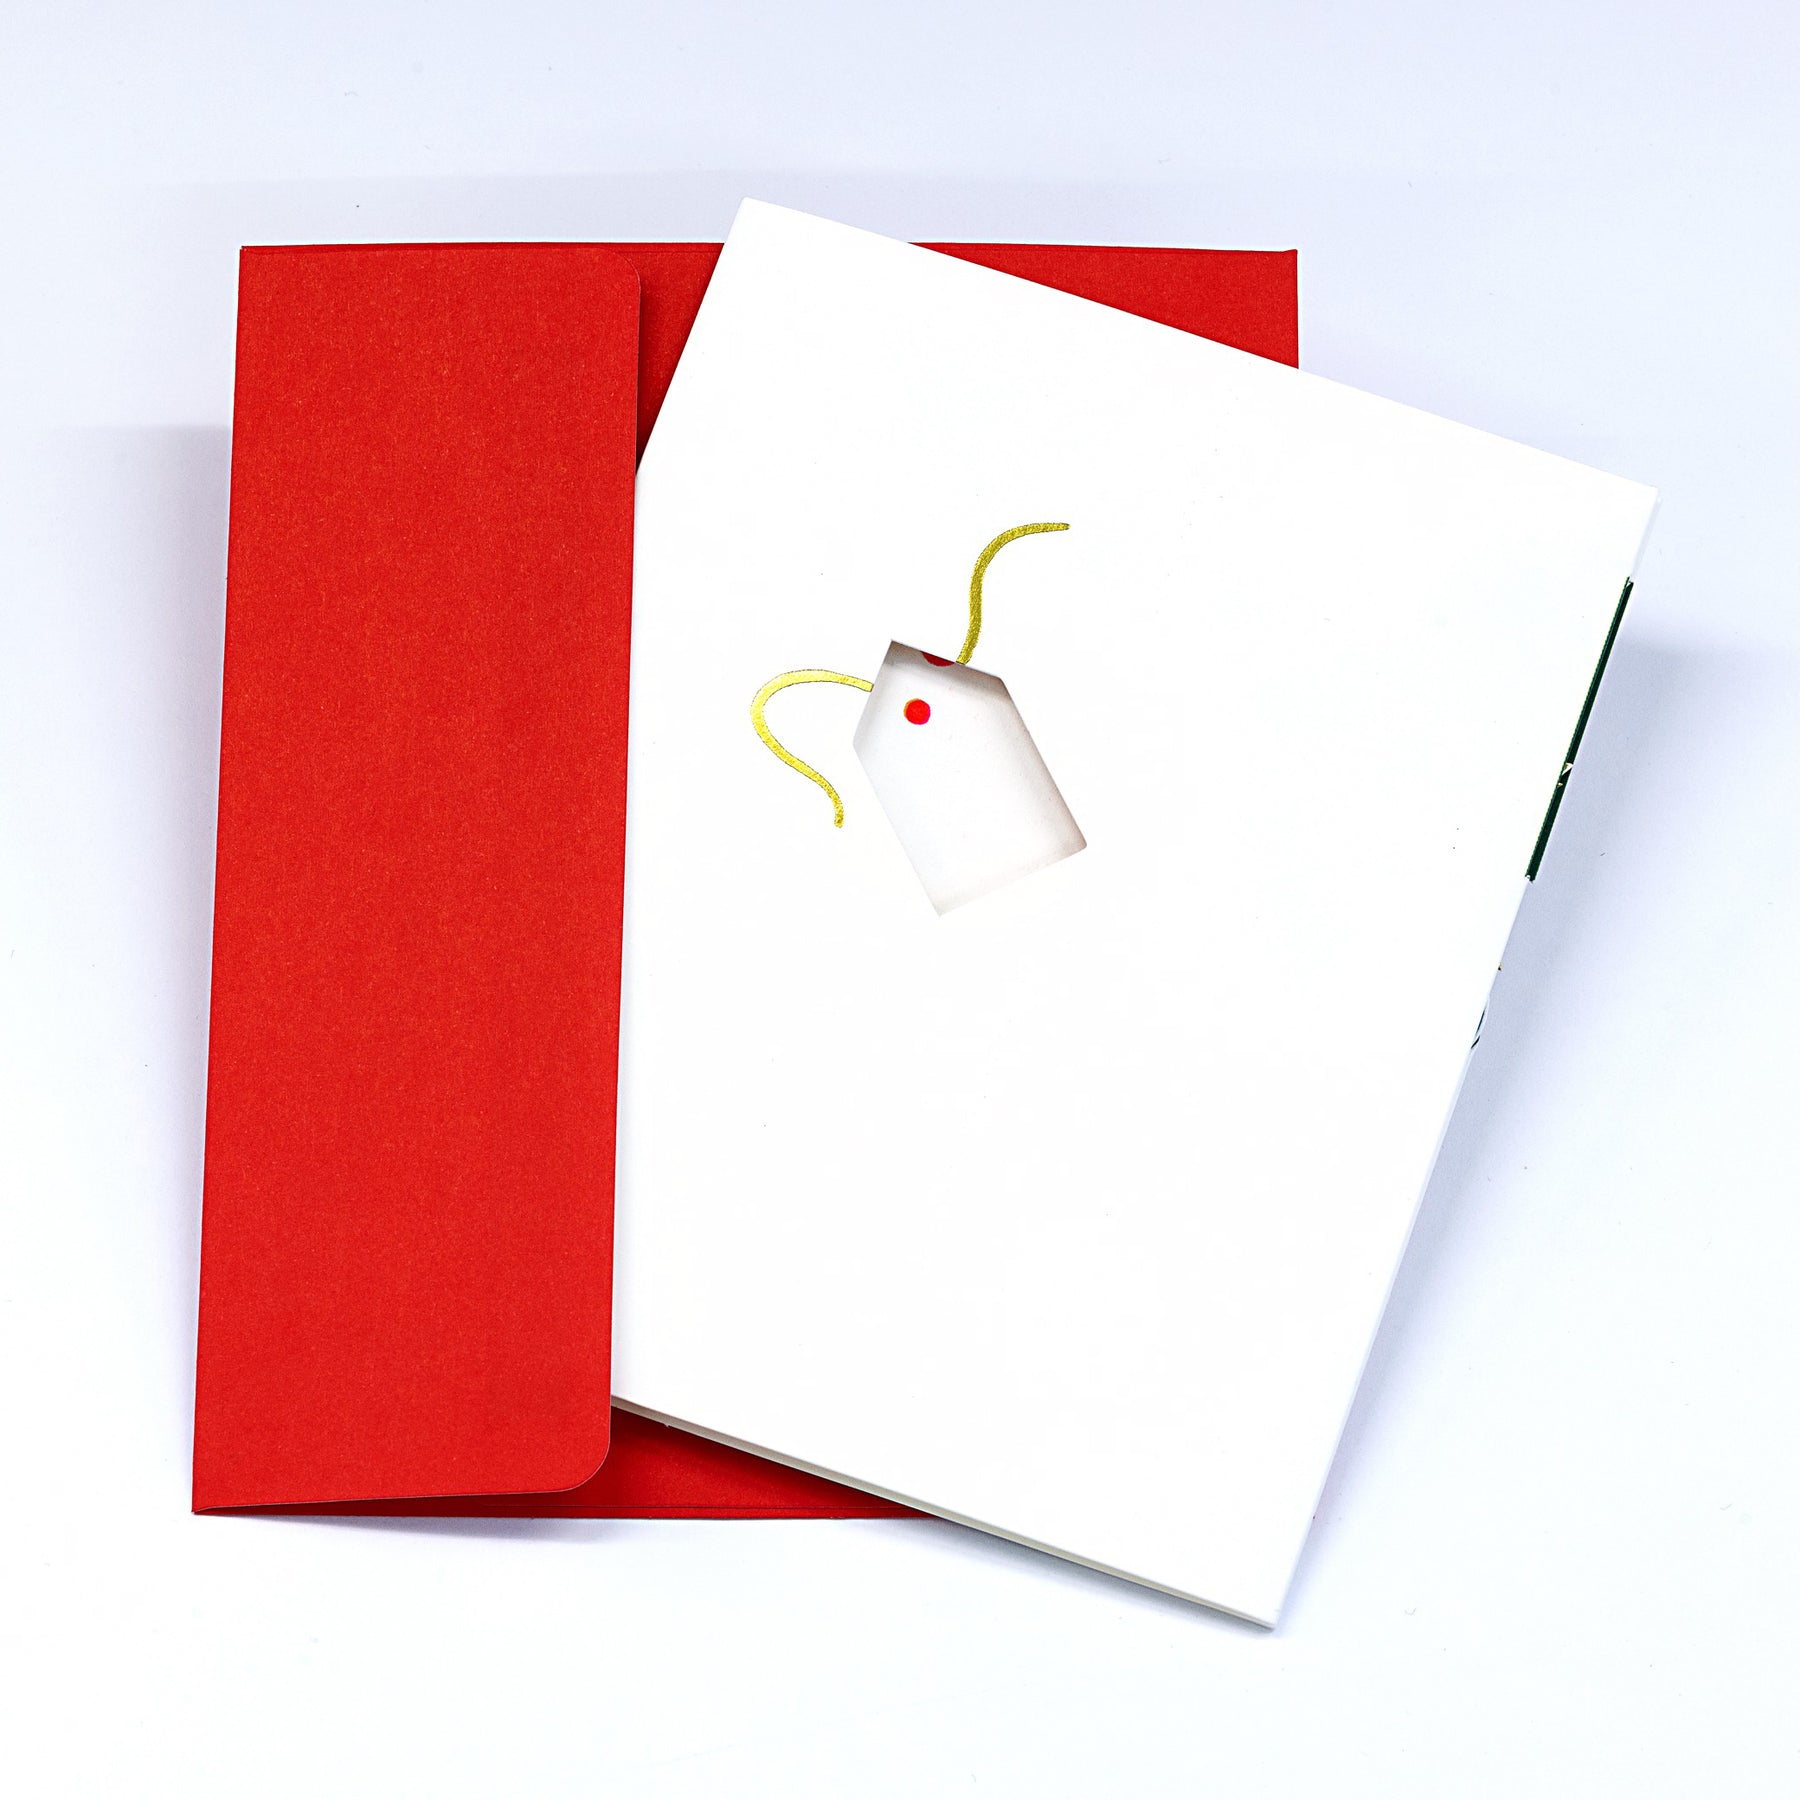 IC Design, Gérard Lo Monaco Santa Claus Pop Up Card, Notecard,